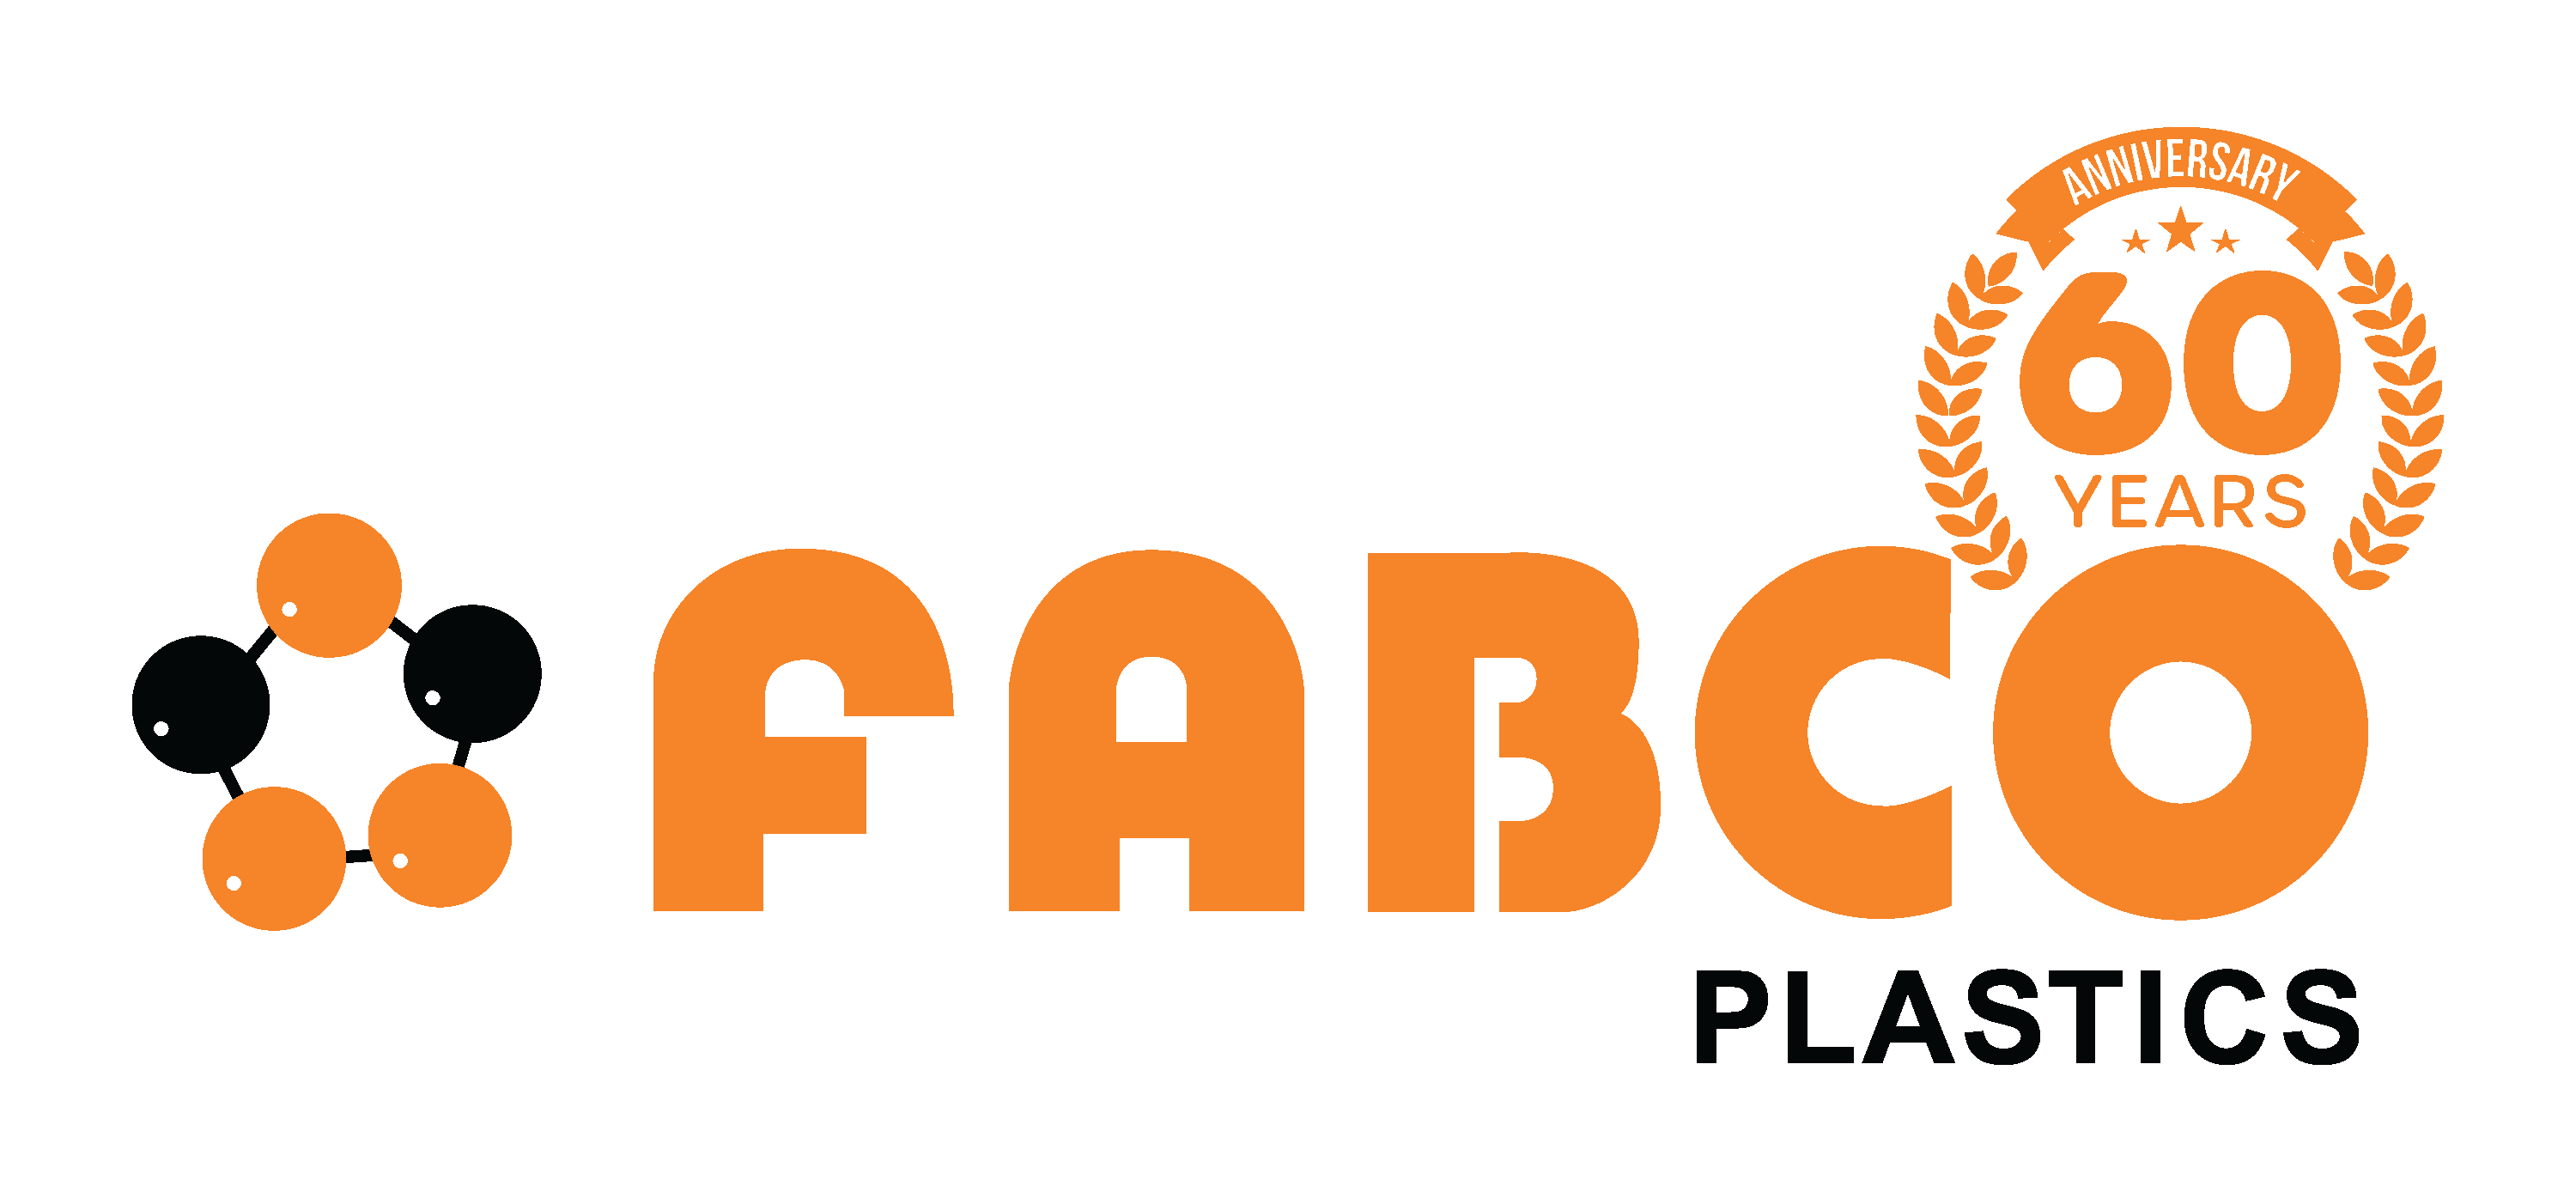 Fabco_60thLogo_FINAL_Black+Orange_HighRes